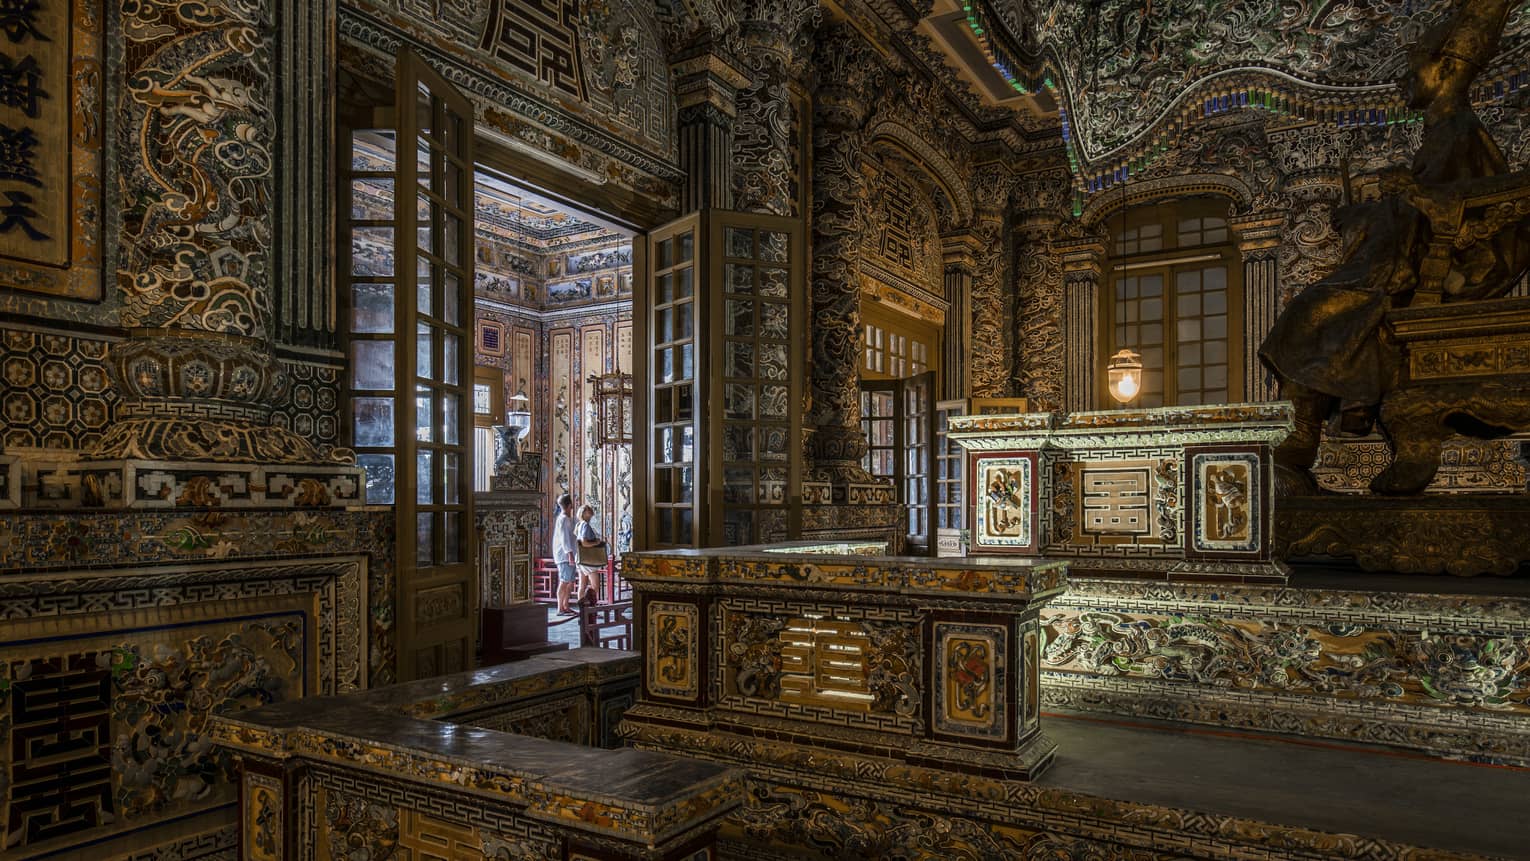 The ornate interior of Hue City - Khai Dinh Tomb